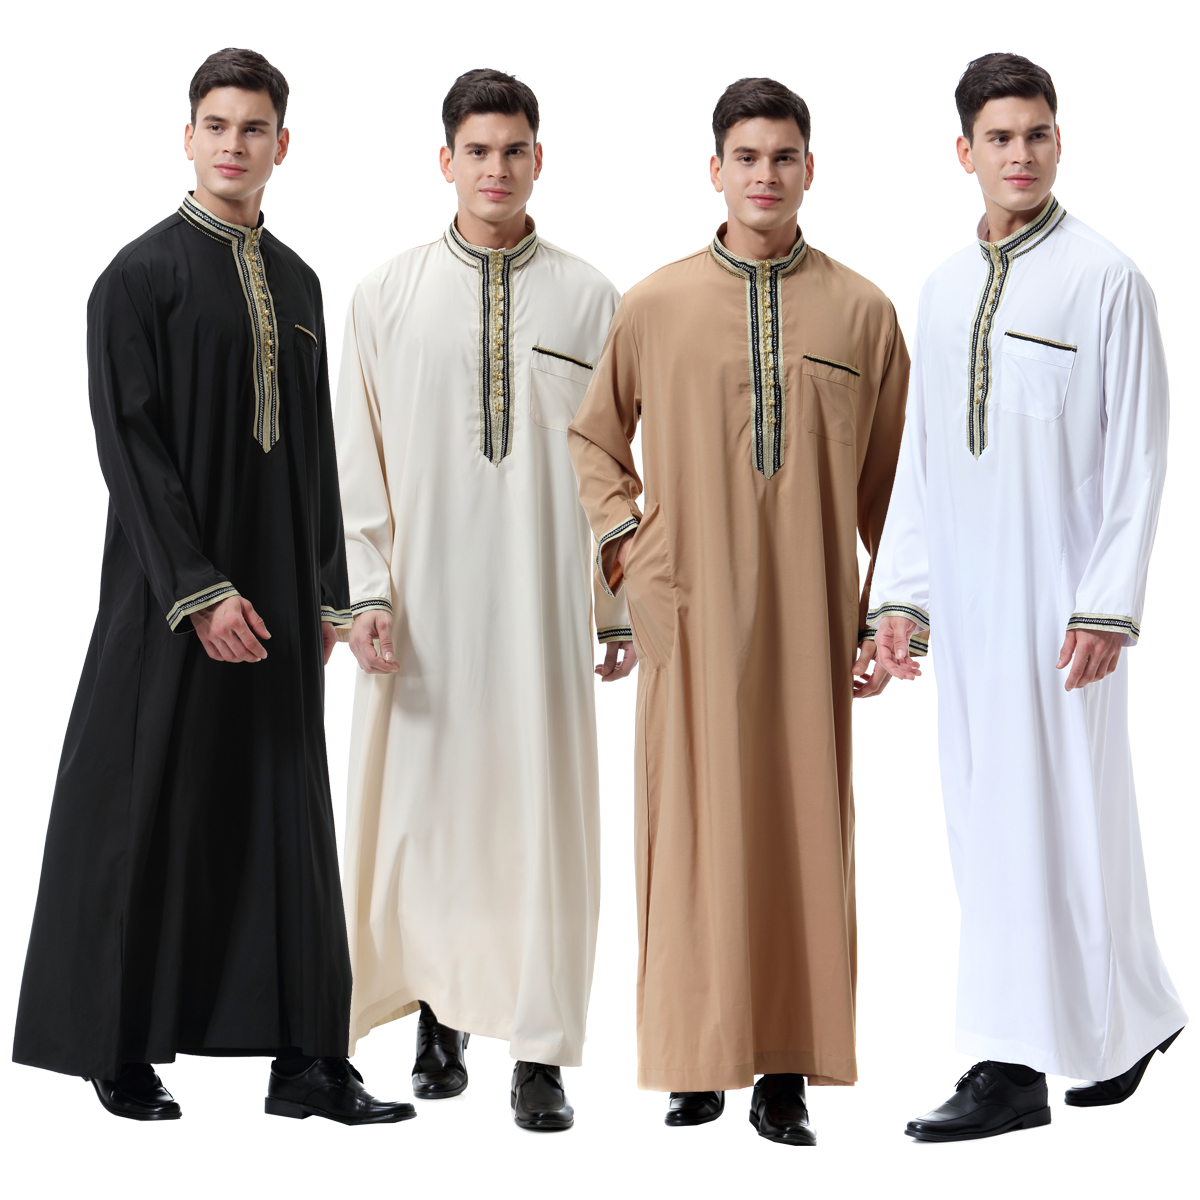  Men s Islamic Clothing Saudi Thobe Robe Muslim Jubba 